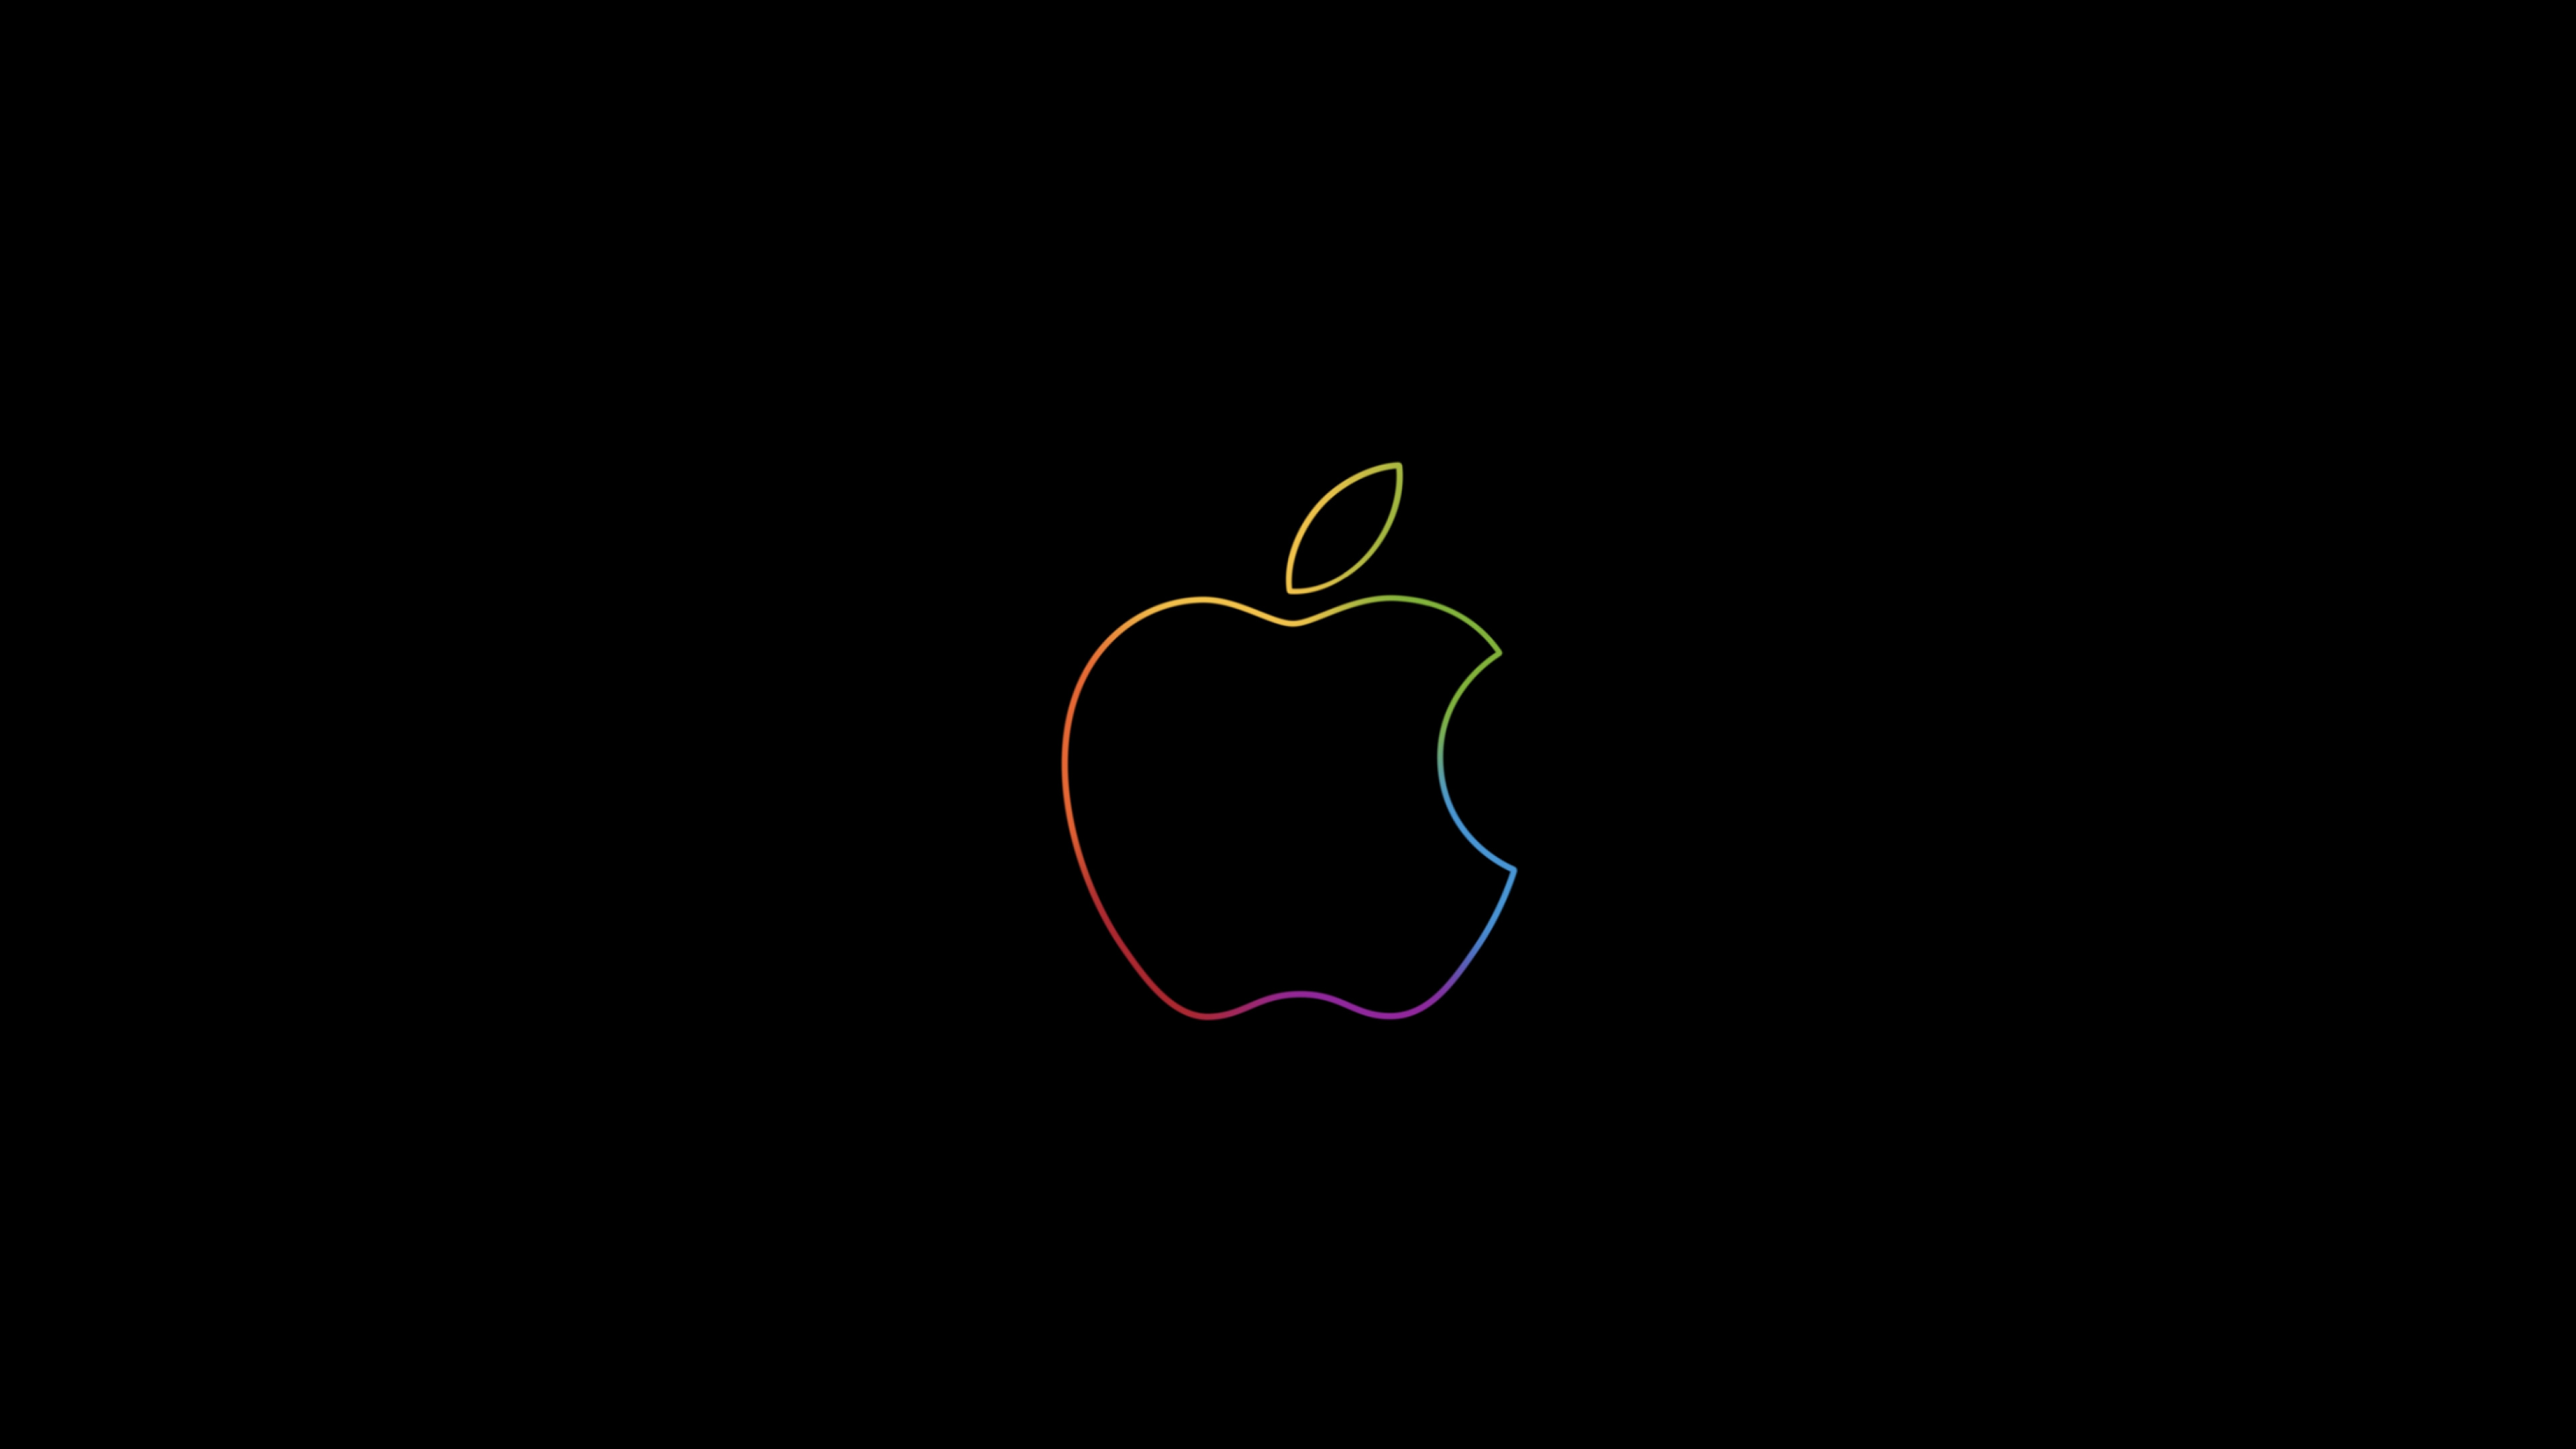 iMac Logo, Crisp and vibrant, Apple brand identity, Eye-catching aesthetics, 3840x2160 4K Desktop